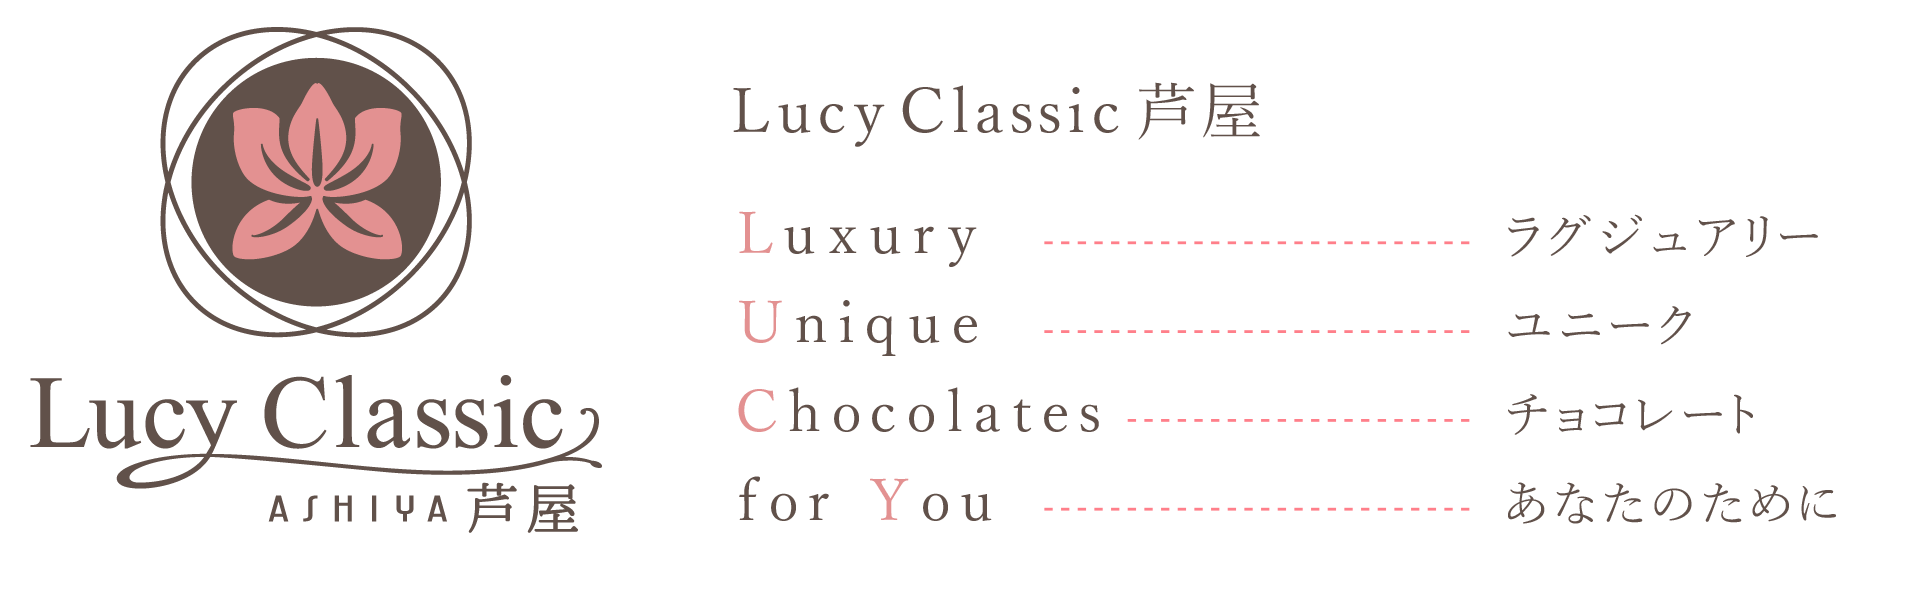 Lucy Classic – Ashiya Japan